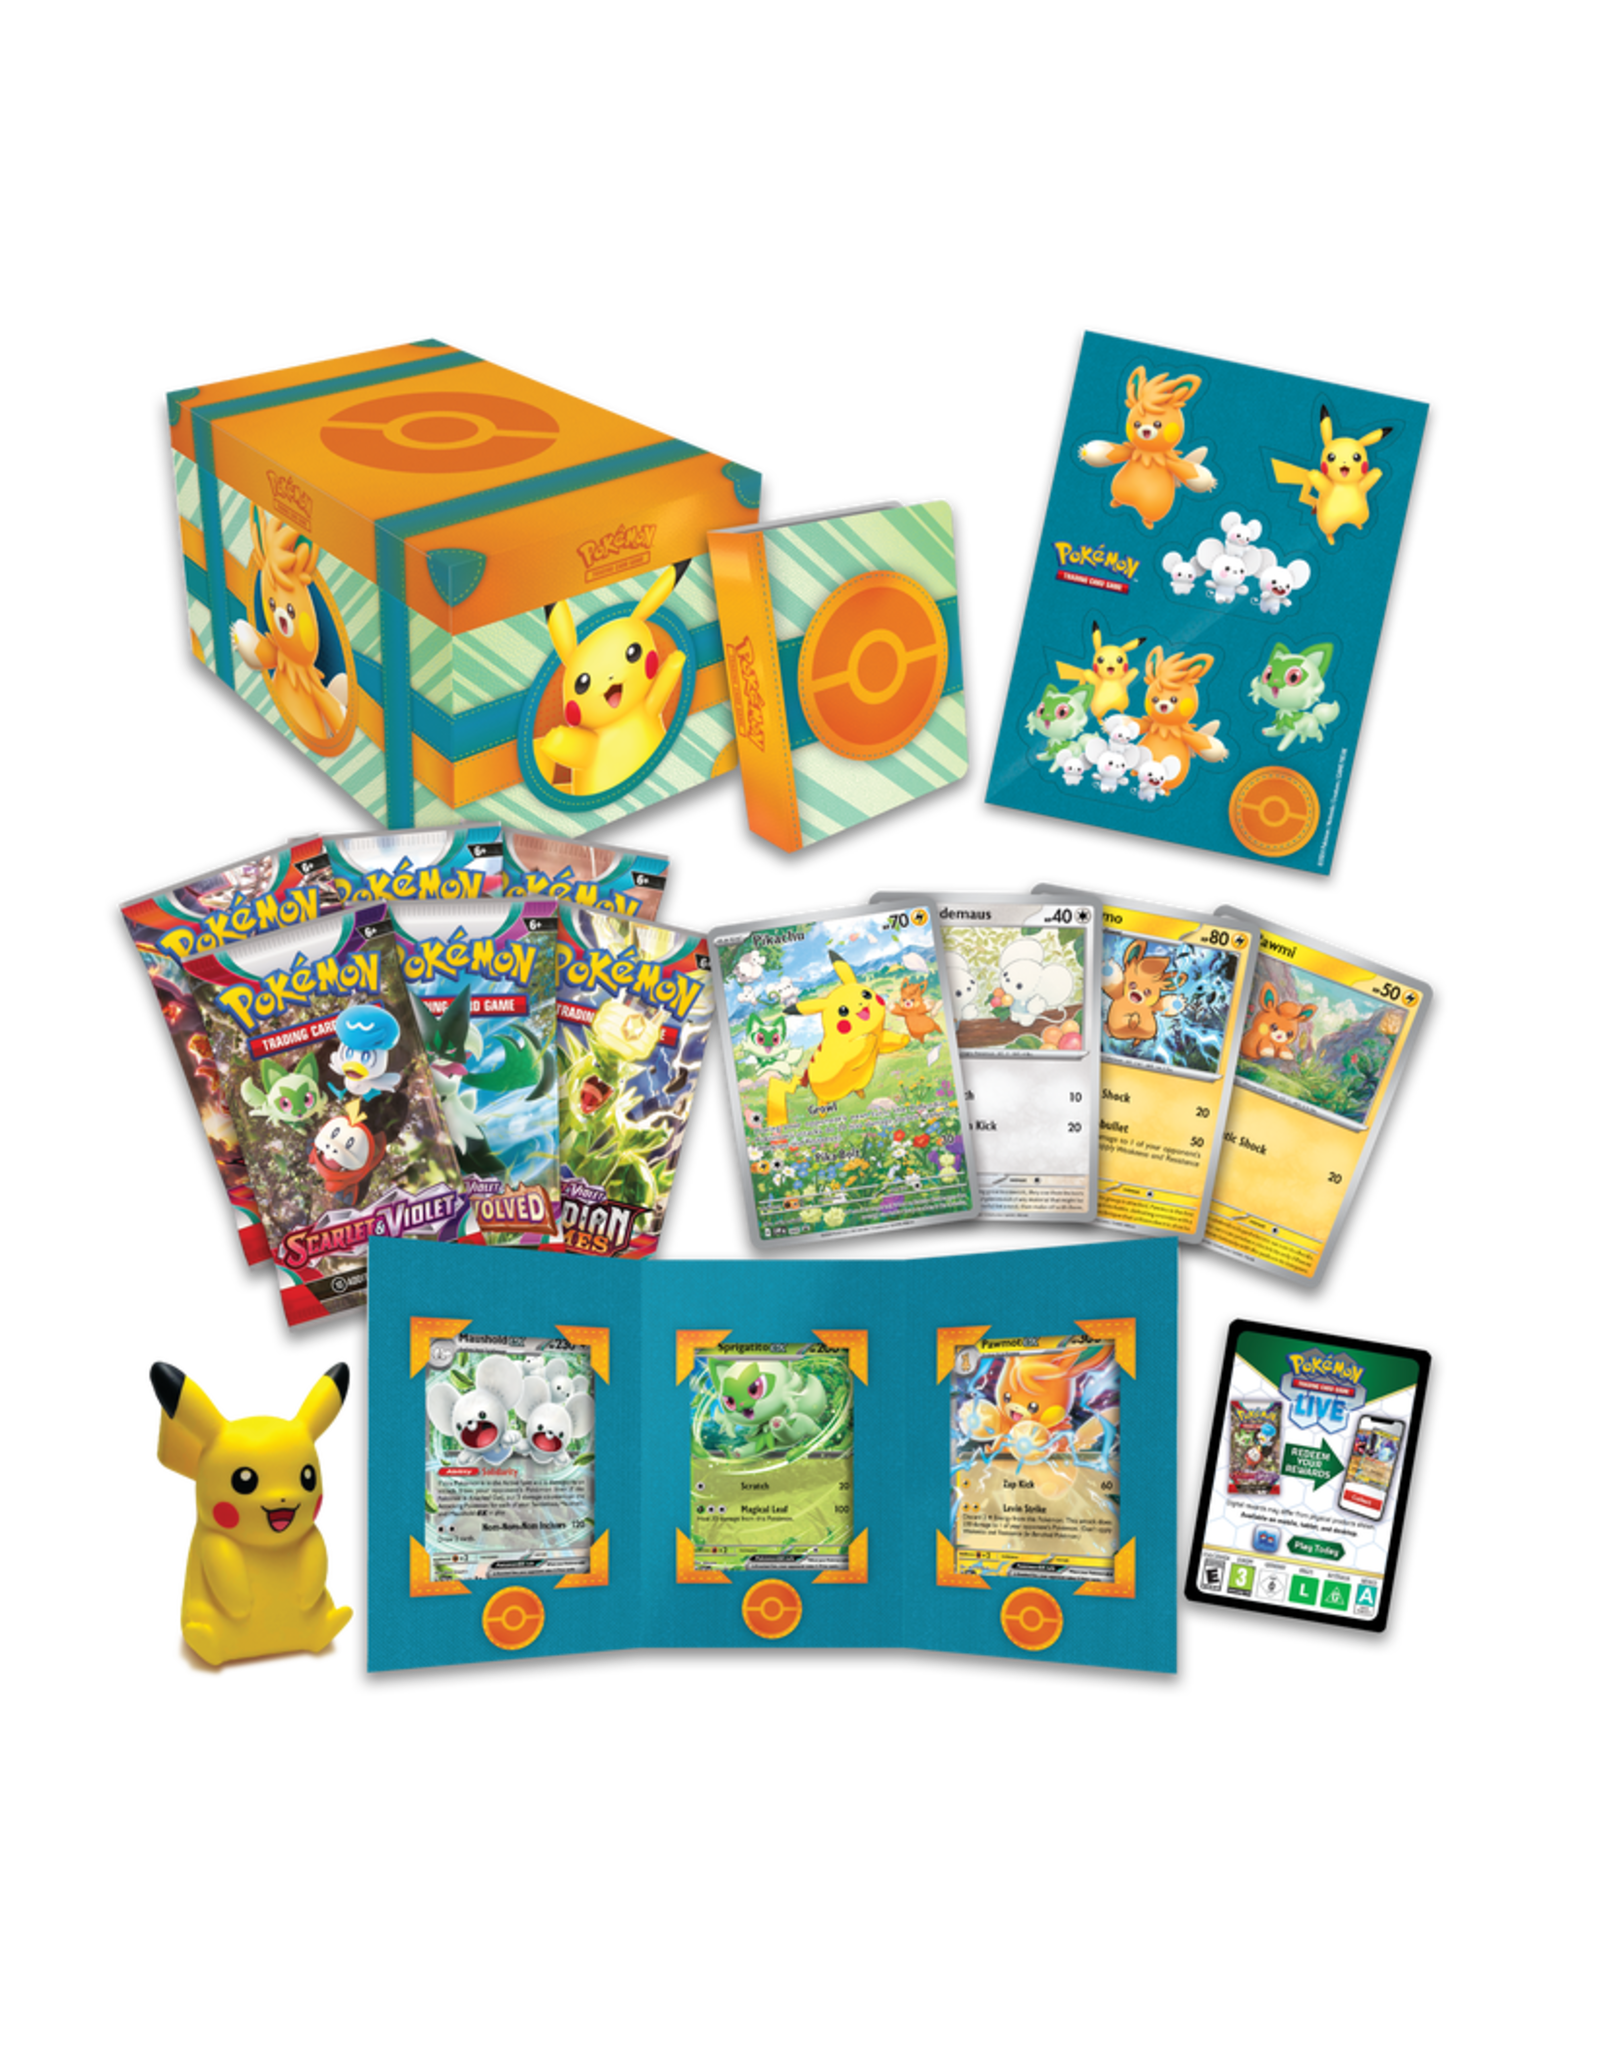 The Pokemon Company Pokémon Trading Card Game - Paldea Adventure Chest